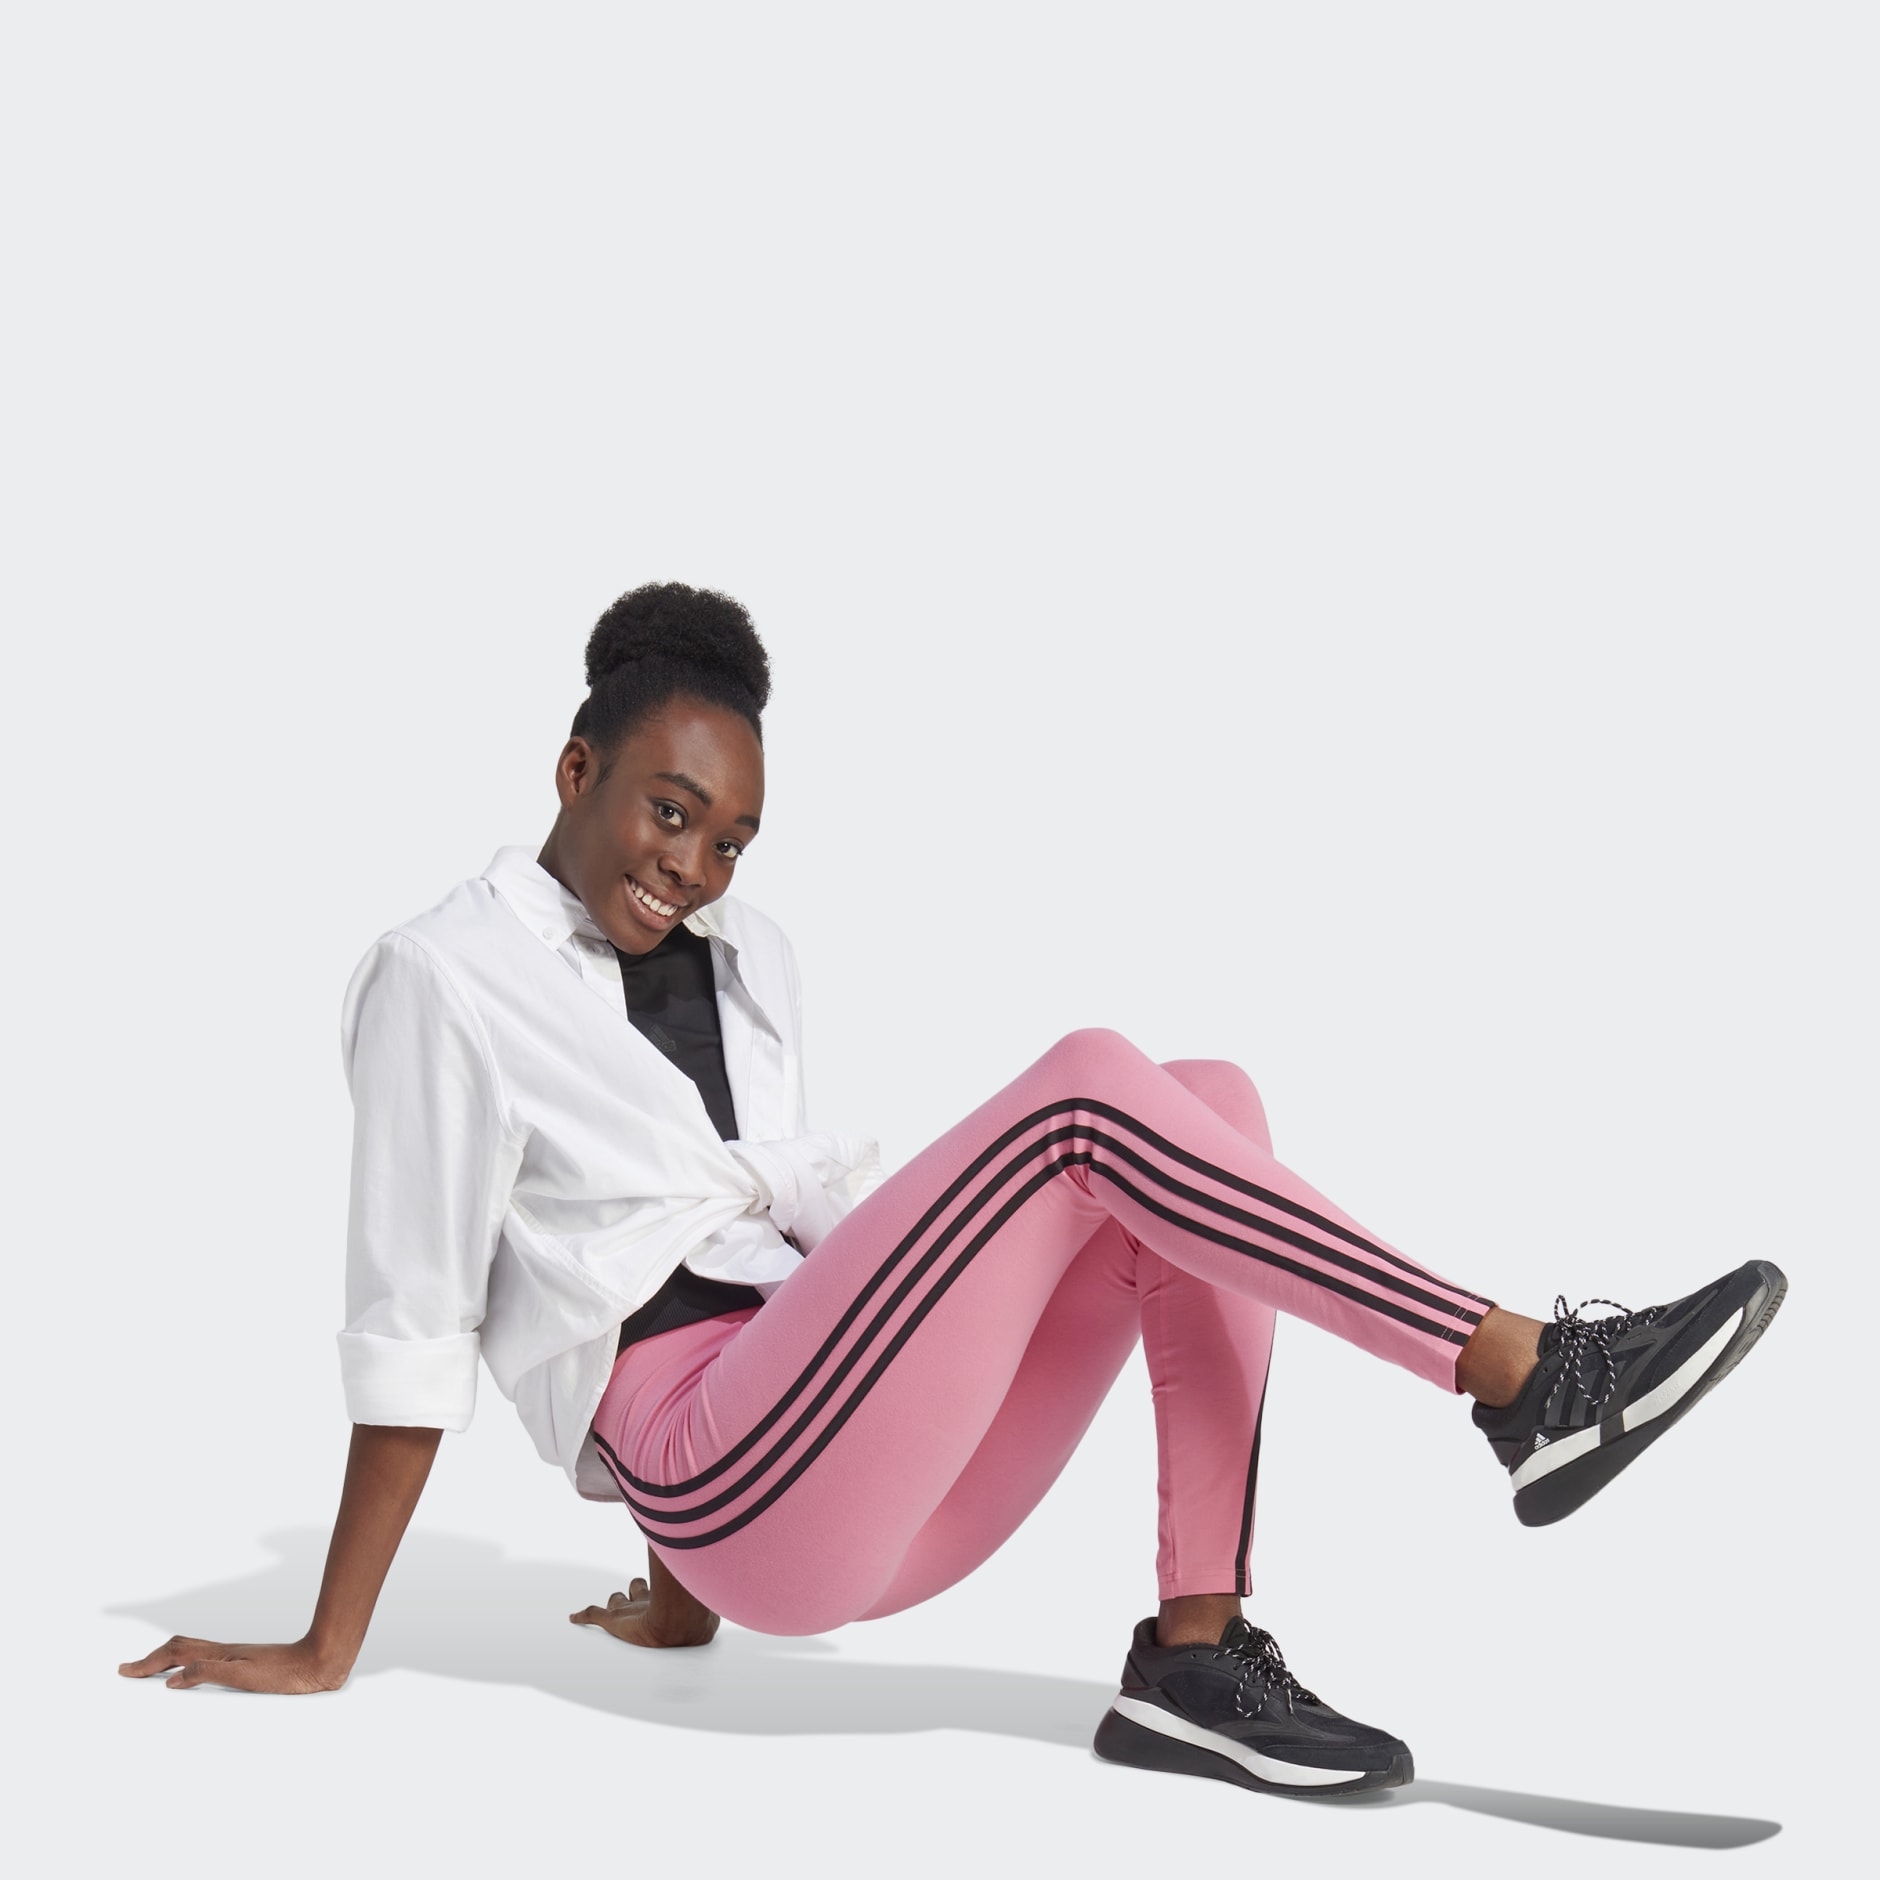 adidas Future Icons 3-Stripes Leggings - Pink